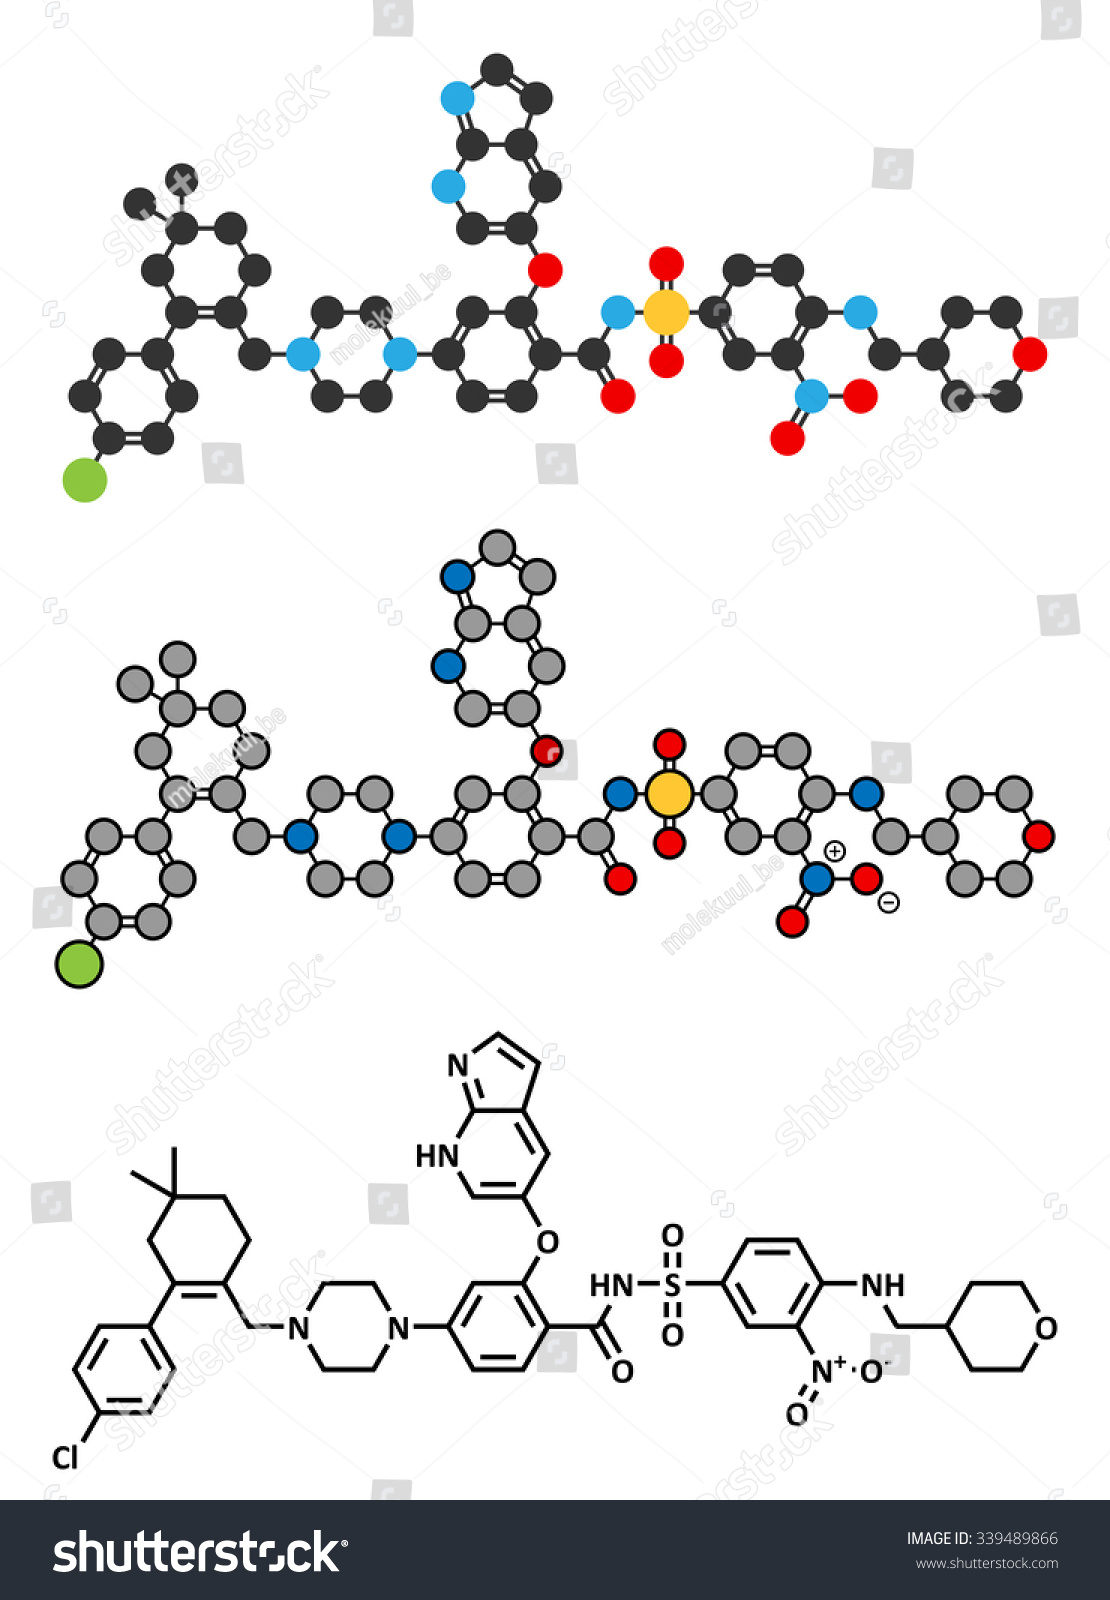 Venetoclax抗癌药物分子(bcl - 2抑制剂)。程式